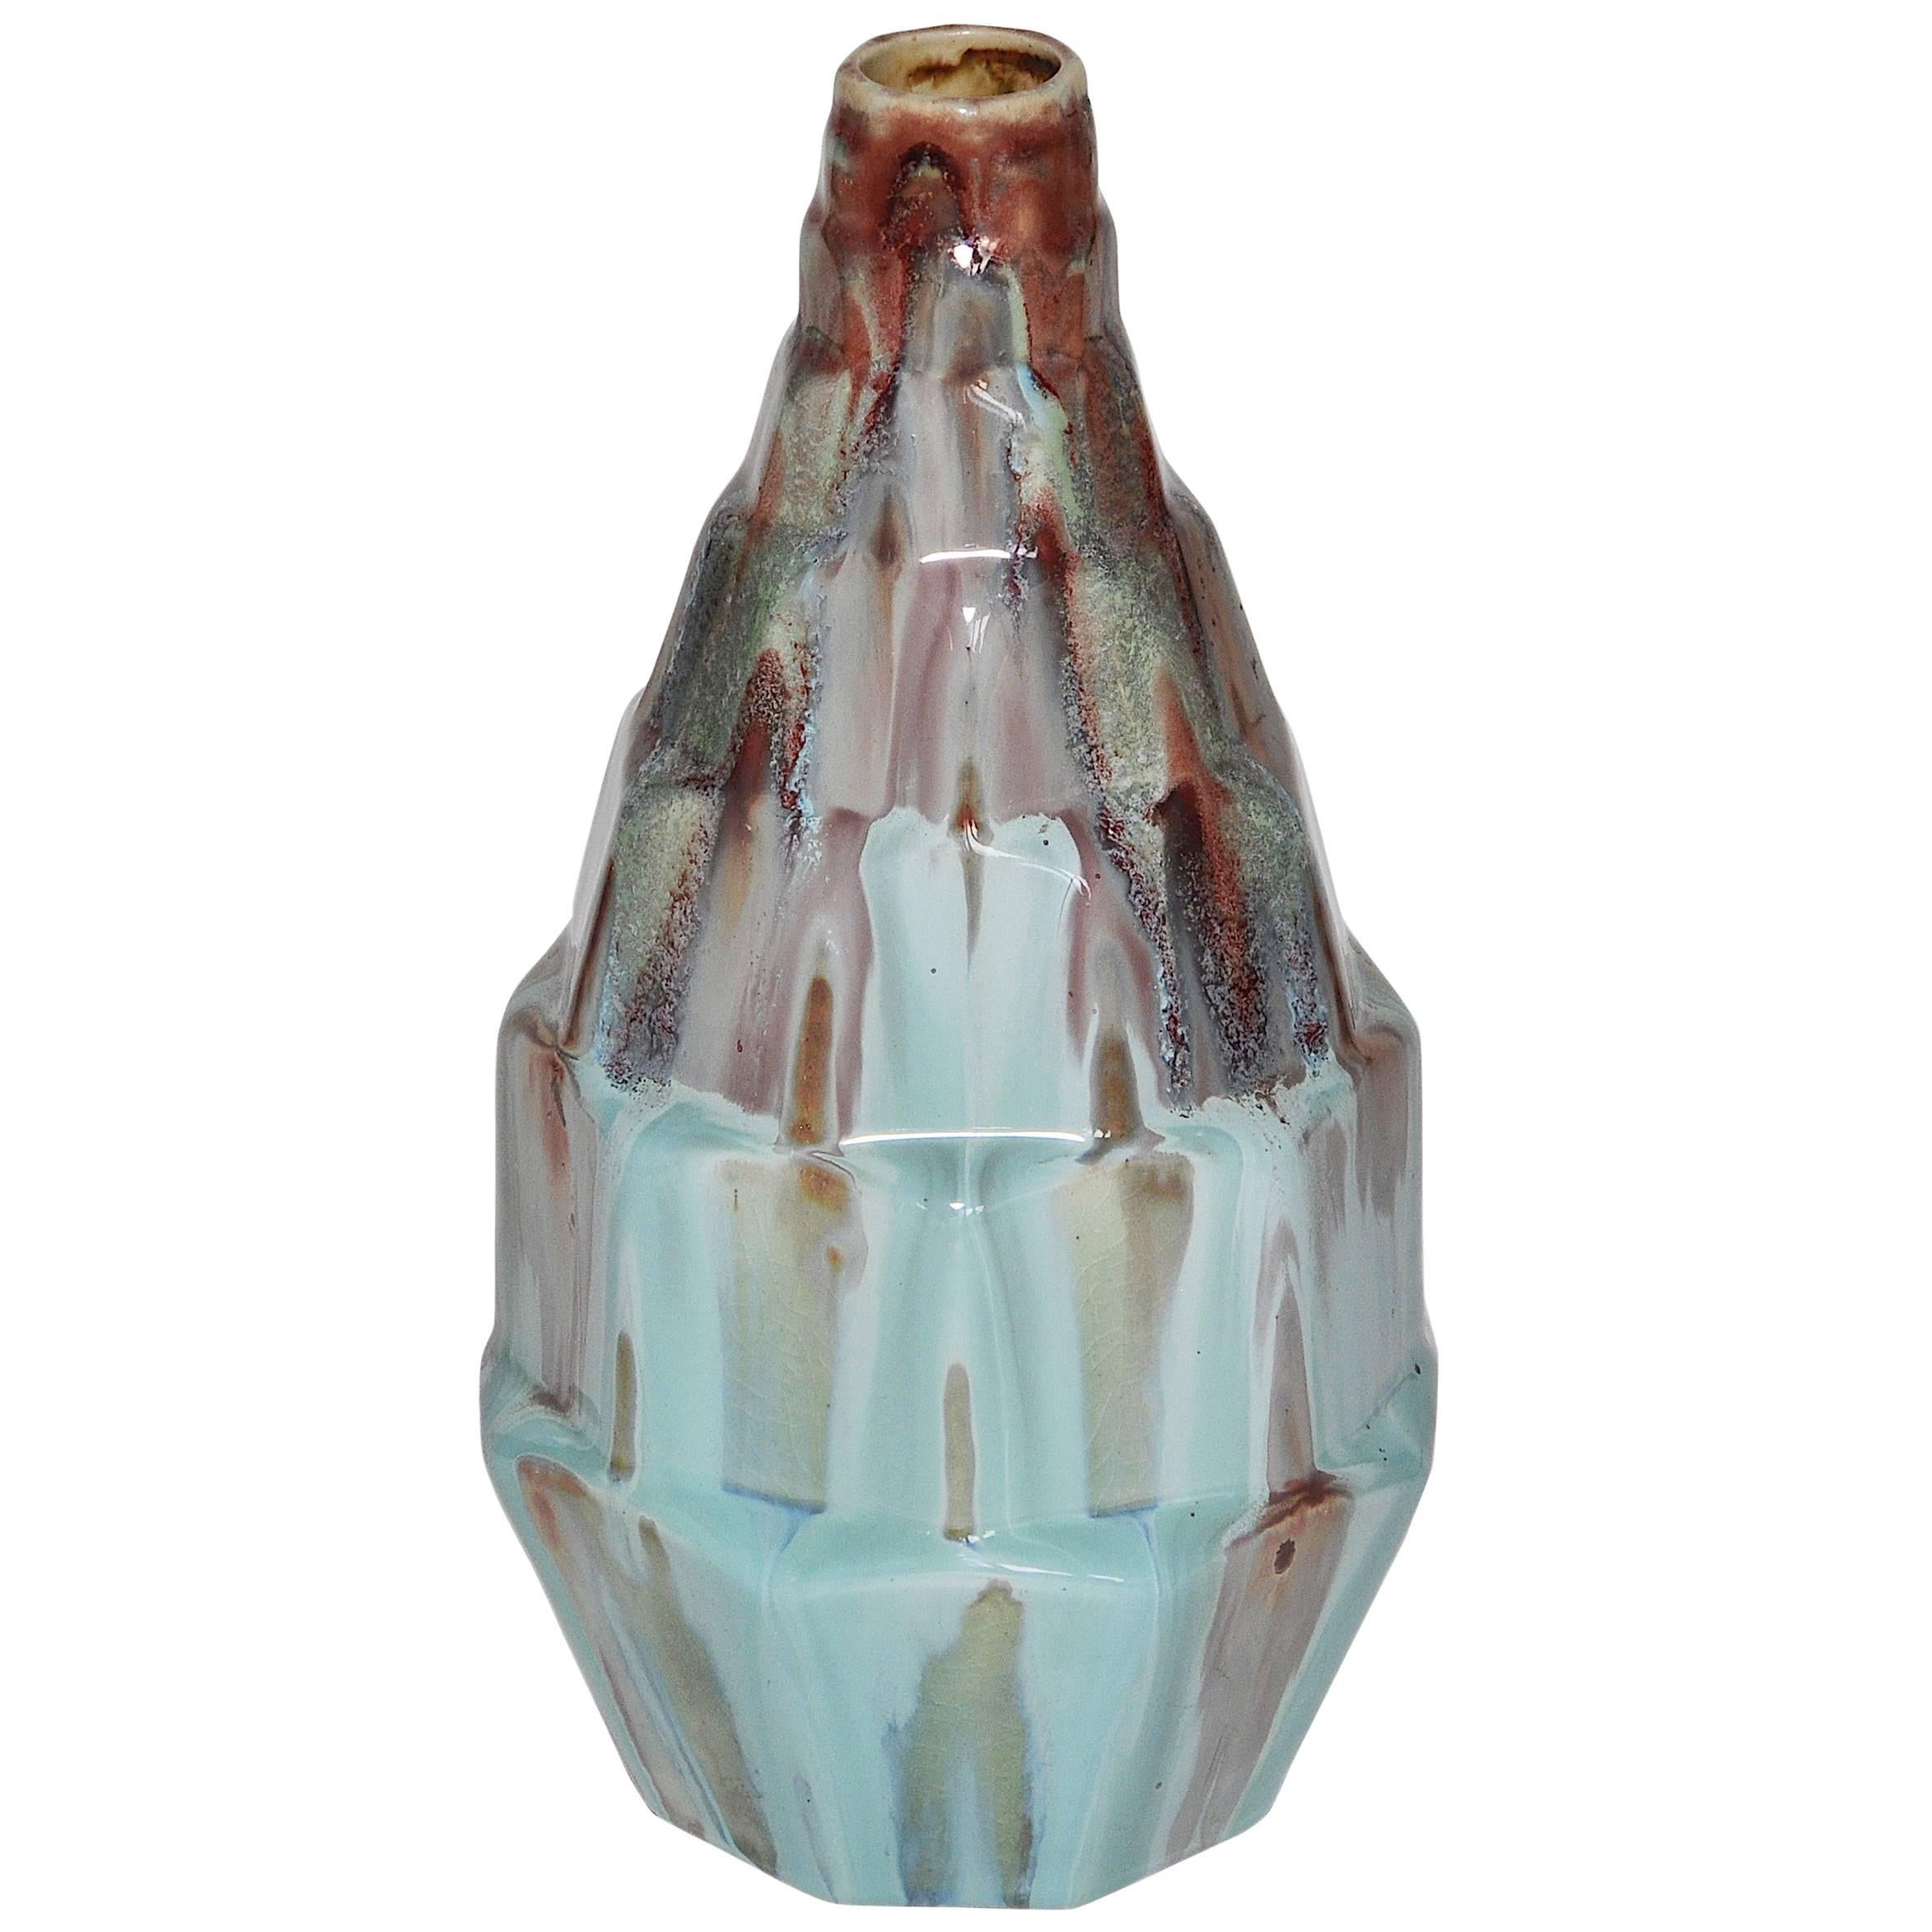 Rare French Art Deco Gabriel Fourmaintraux Desvres Pot Turquoise Ceramic Vase For Sale